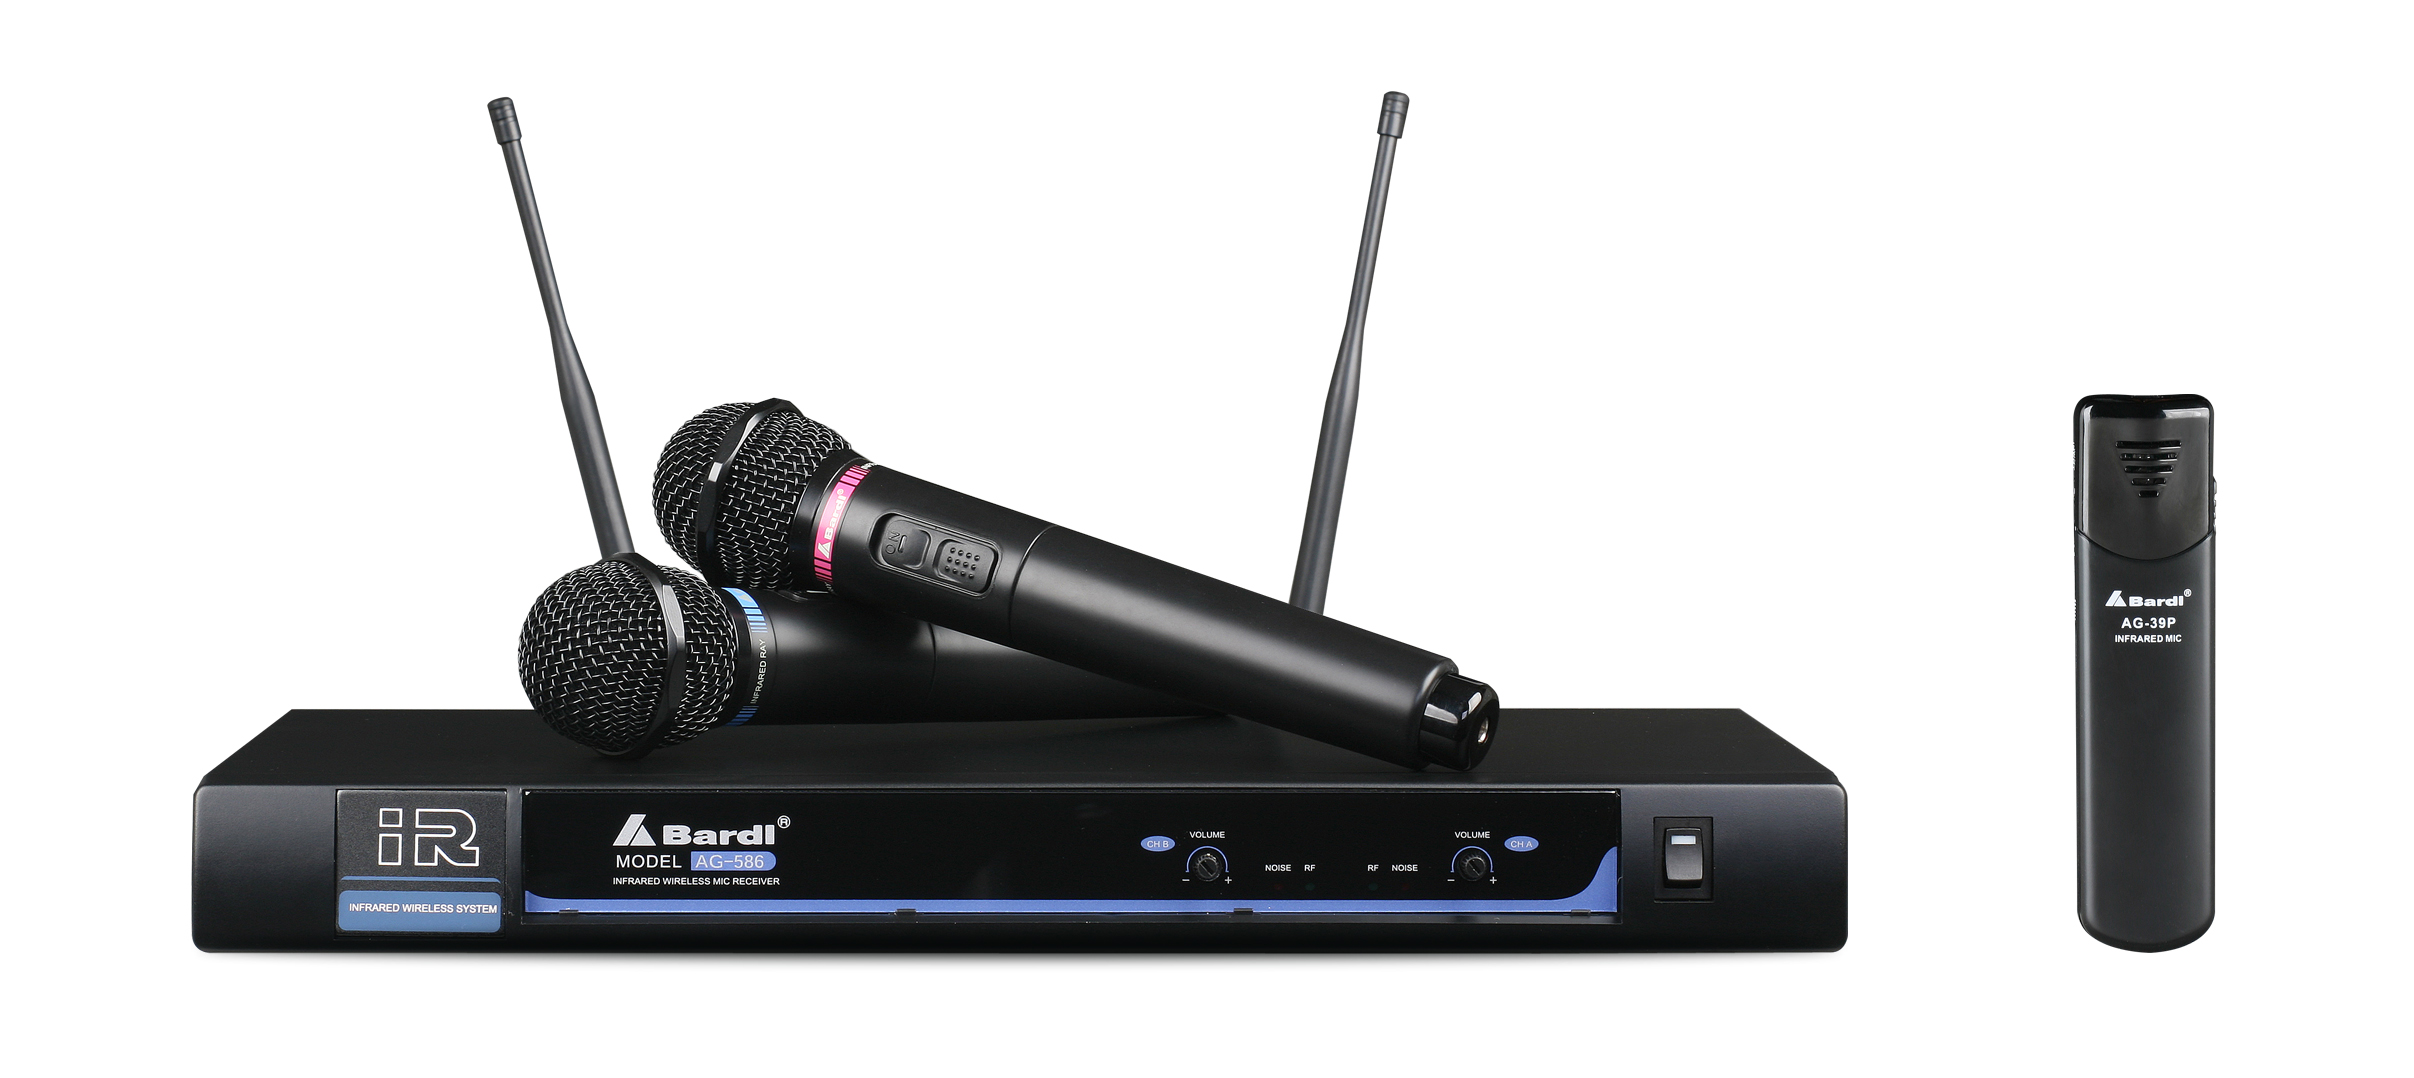 Bardl UHF wireless microphone AG-586.JPG